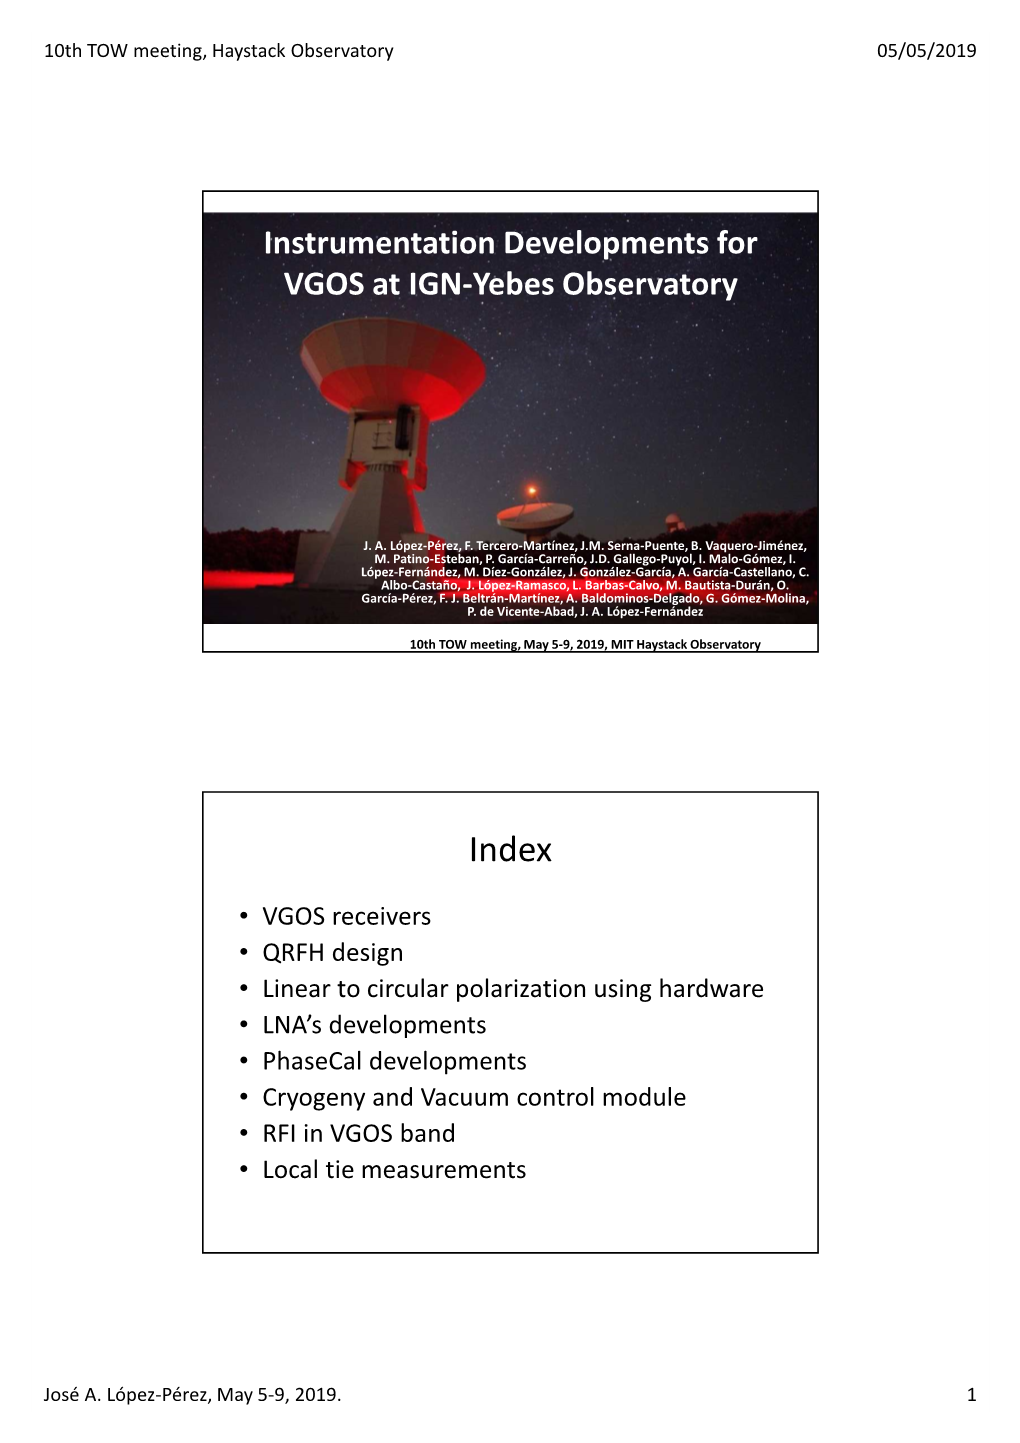 Instrumentation Developments for VGOS at IGN-Yebes Observatory